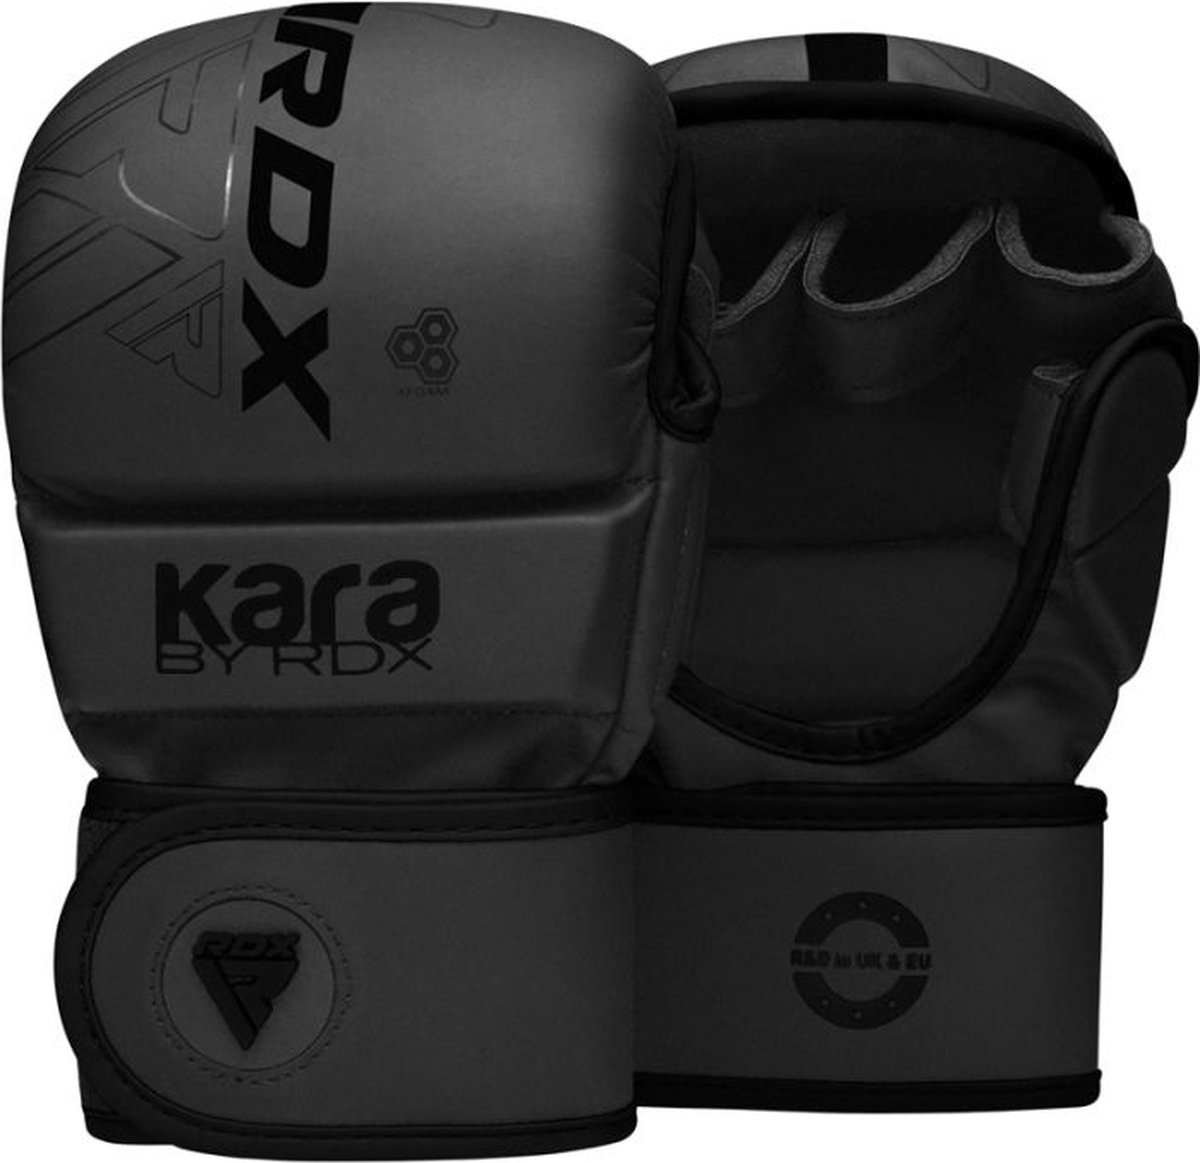 RDX Sports F6 Kara - MMA Bokshandschoenen - Training - Boksen - Kunstleer - Zwart - L/XL